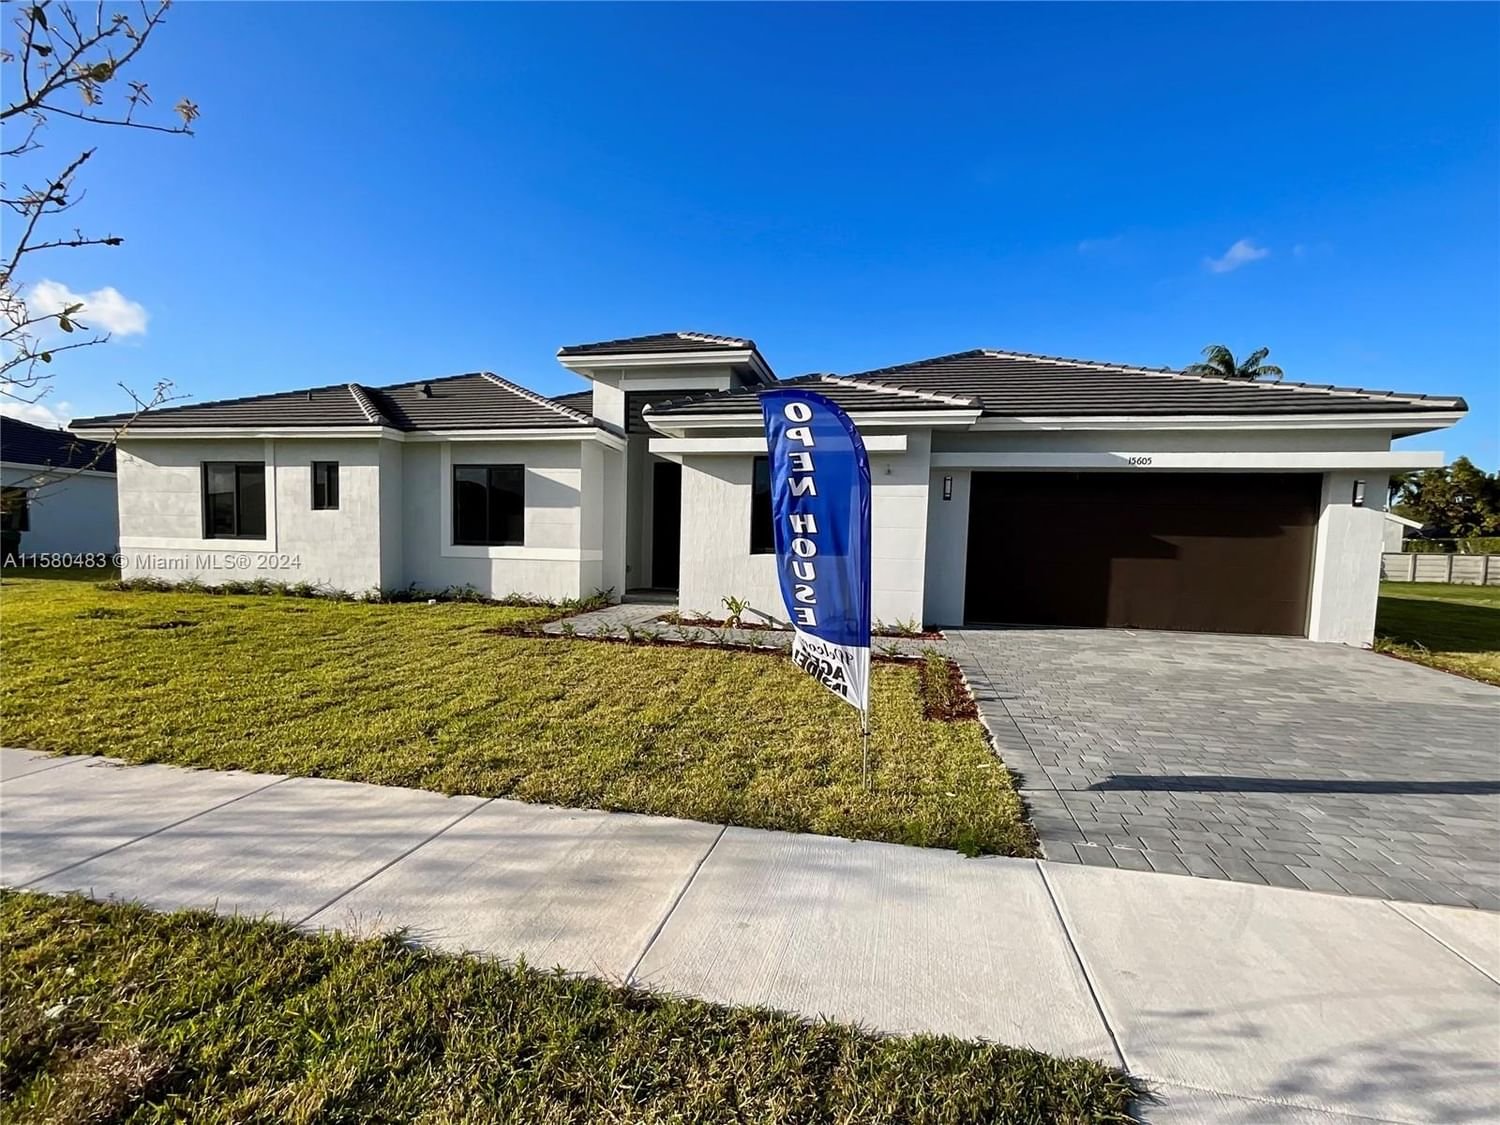 Real estate property located at 15605 158 Terrace, Miami-Dade County, CENTURY HAMMOCKS, Miami, FL